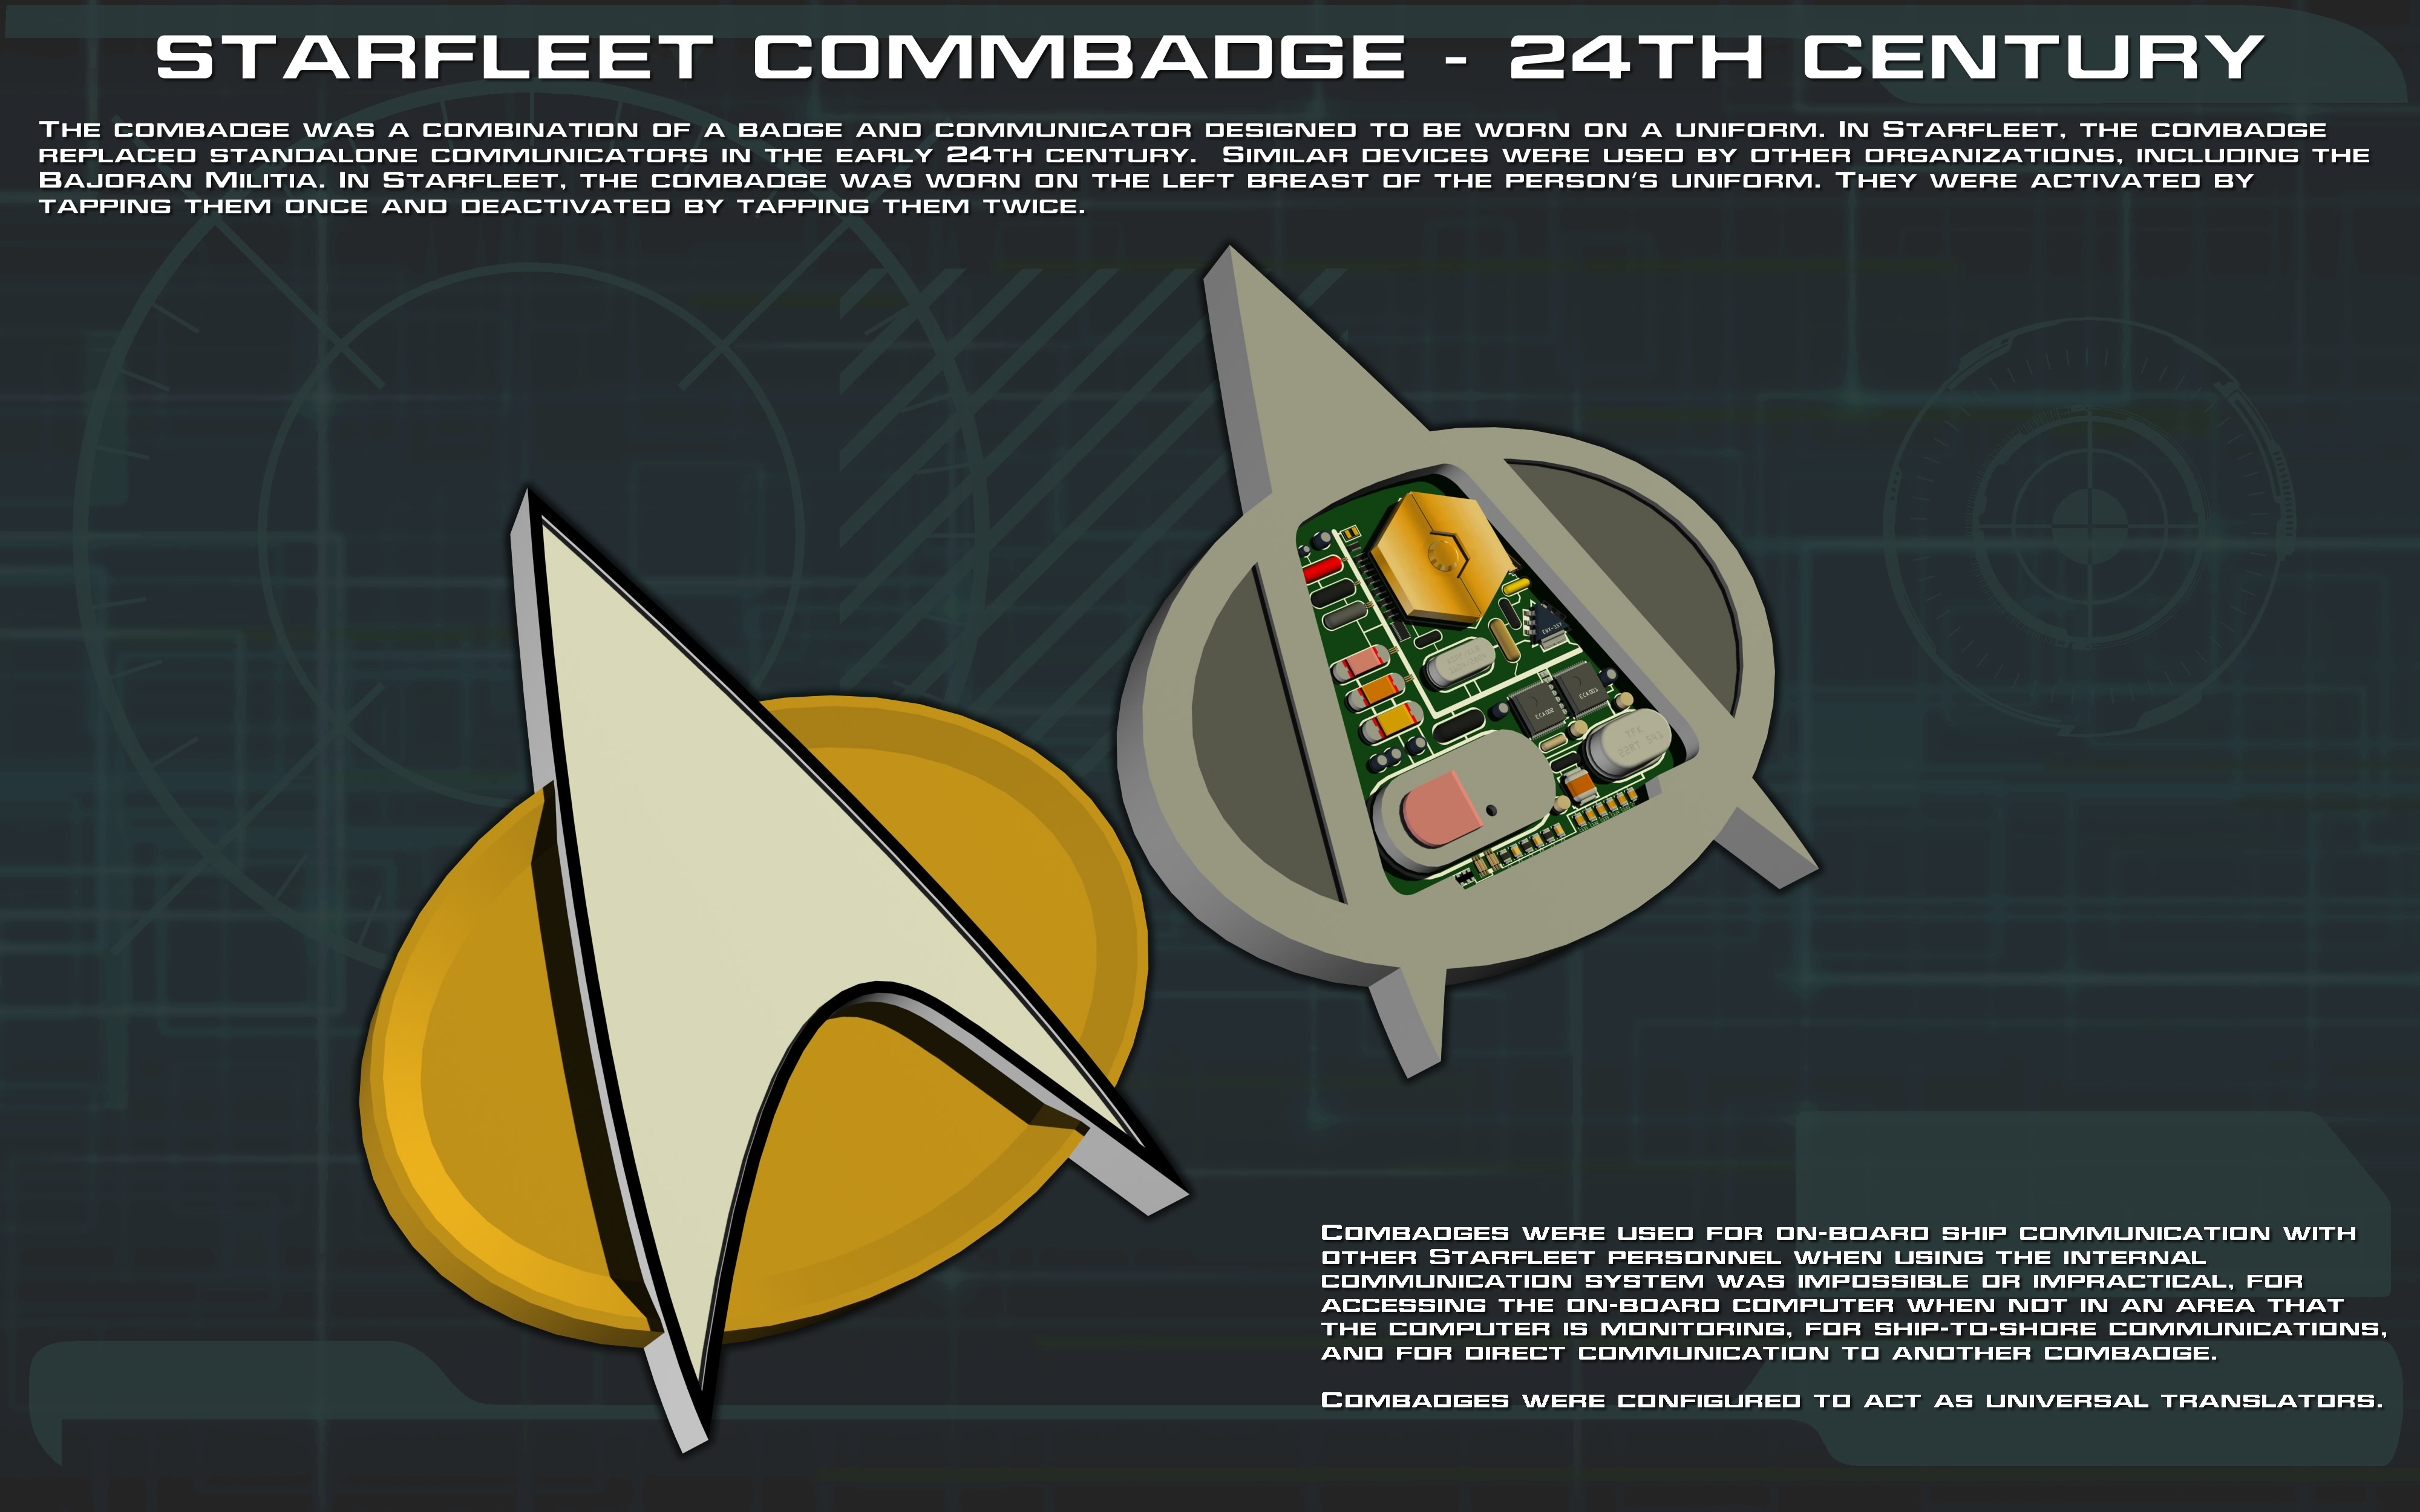 Star Trek 24th Century Communicator - HD Wallpaper 